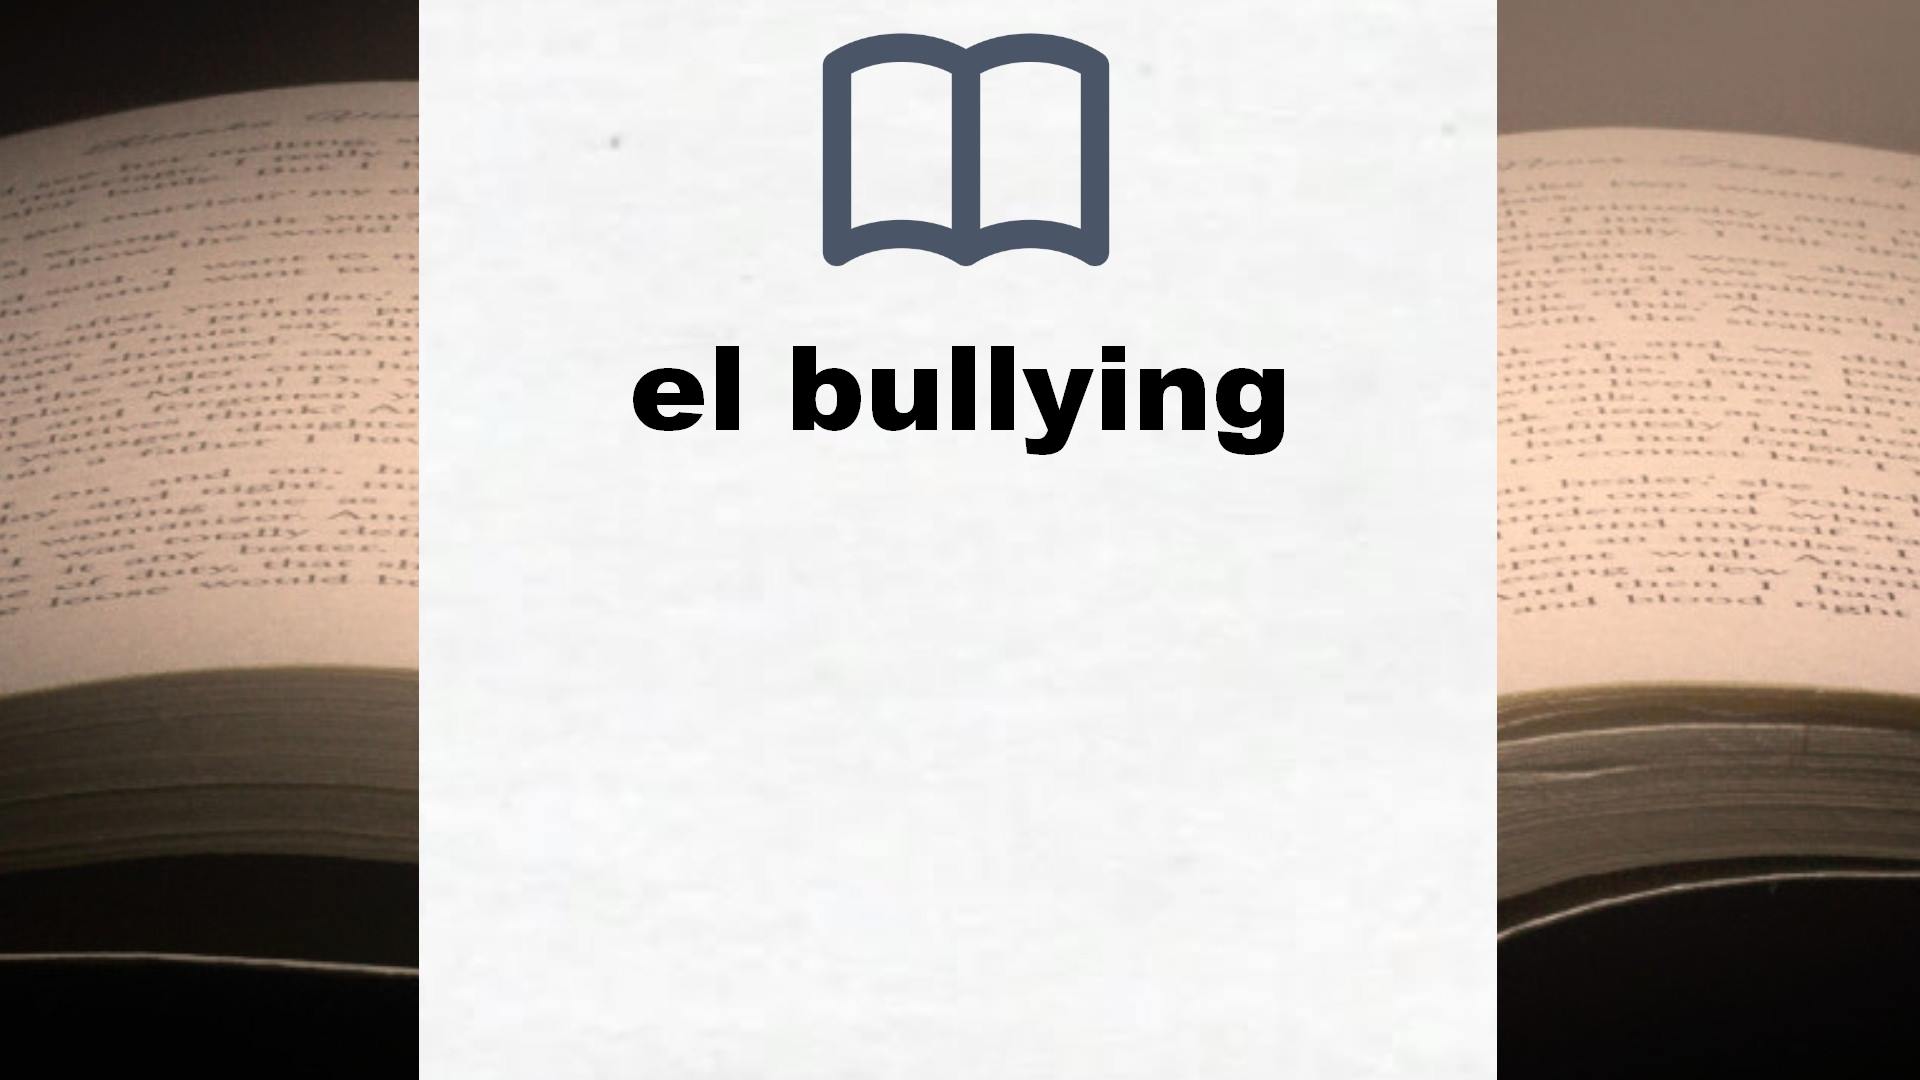 Libros sobre el bullying